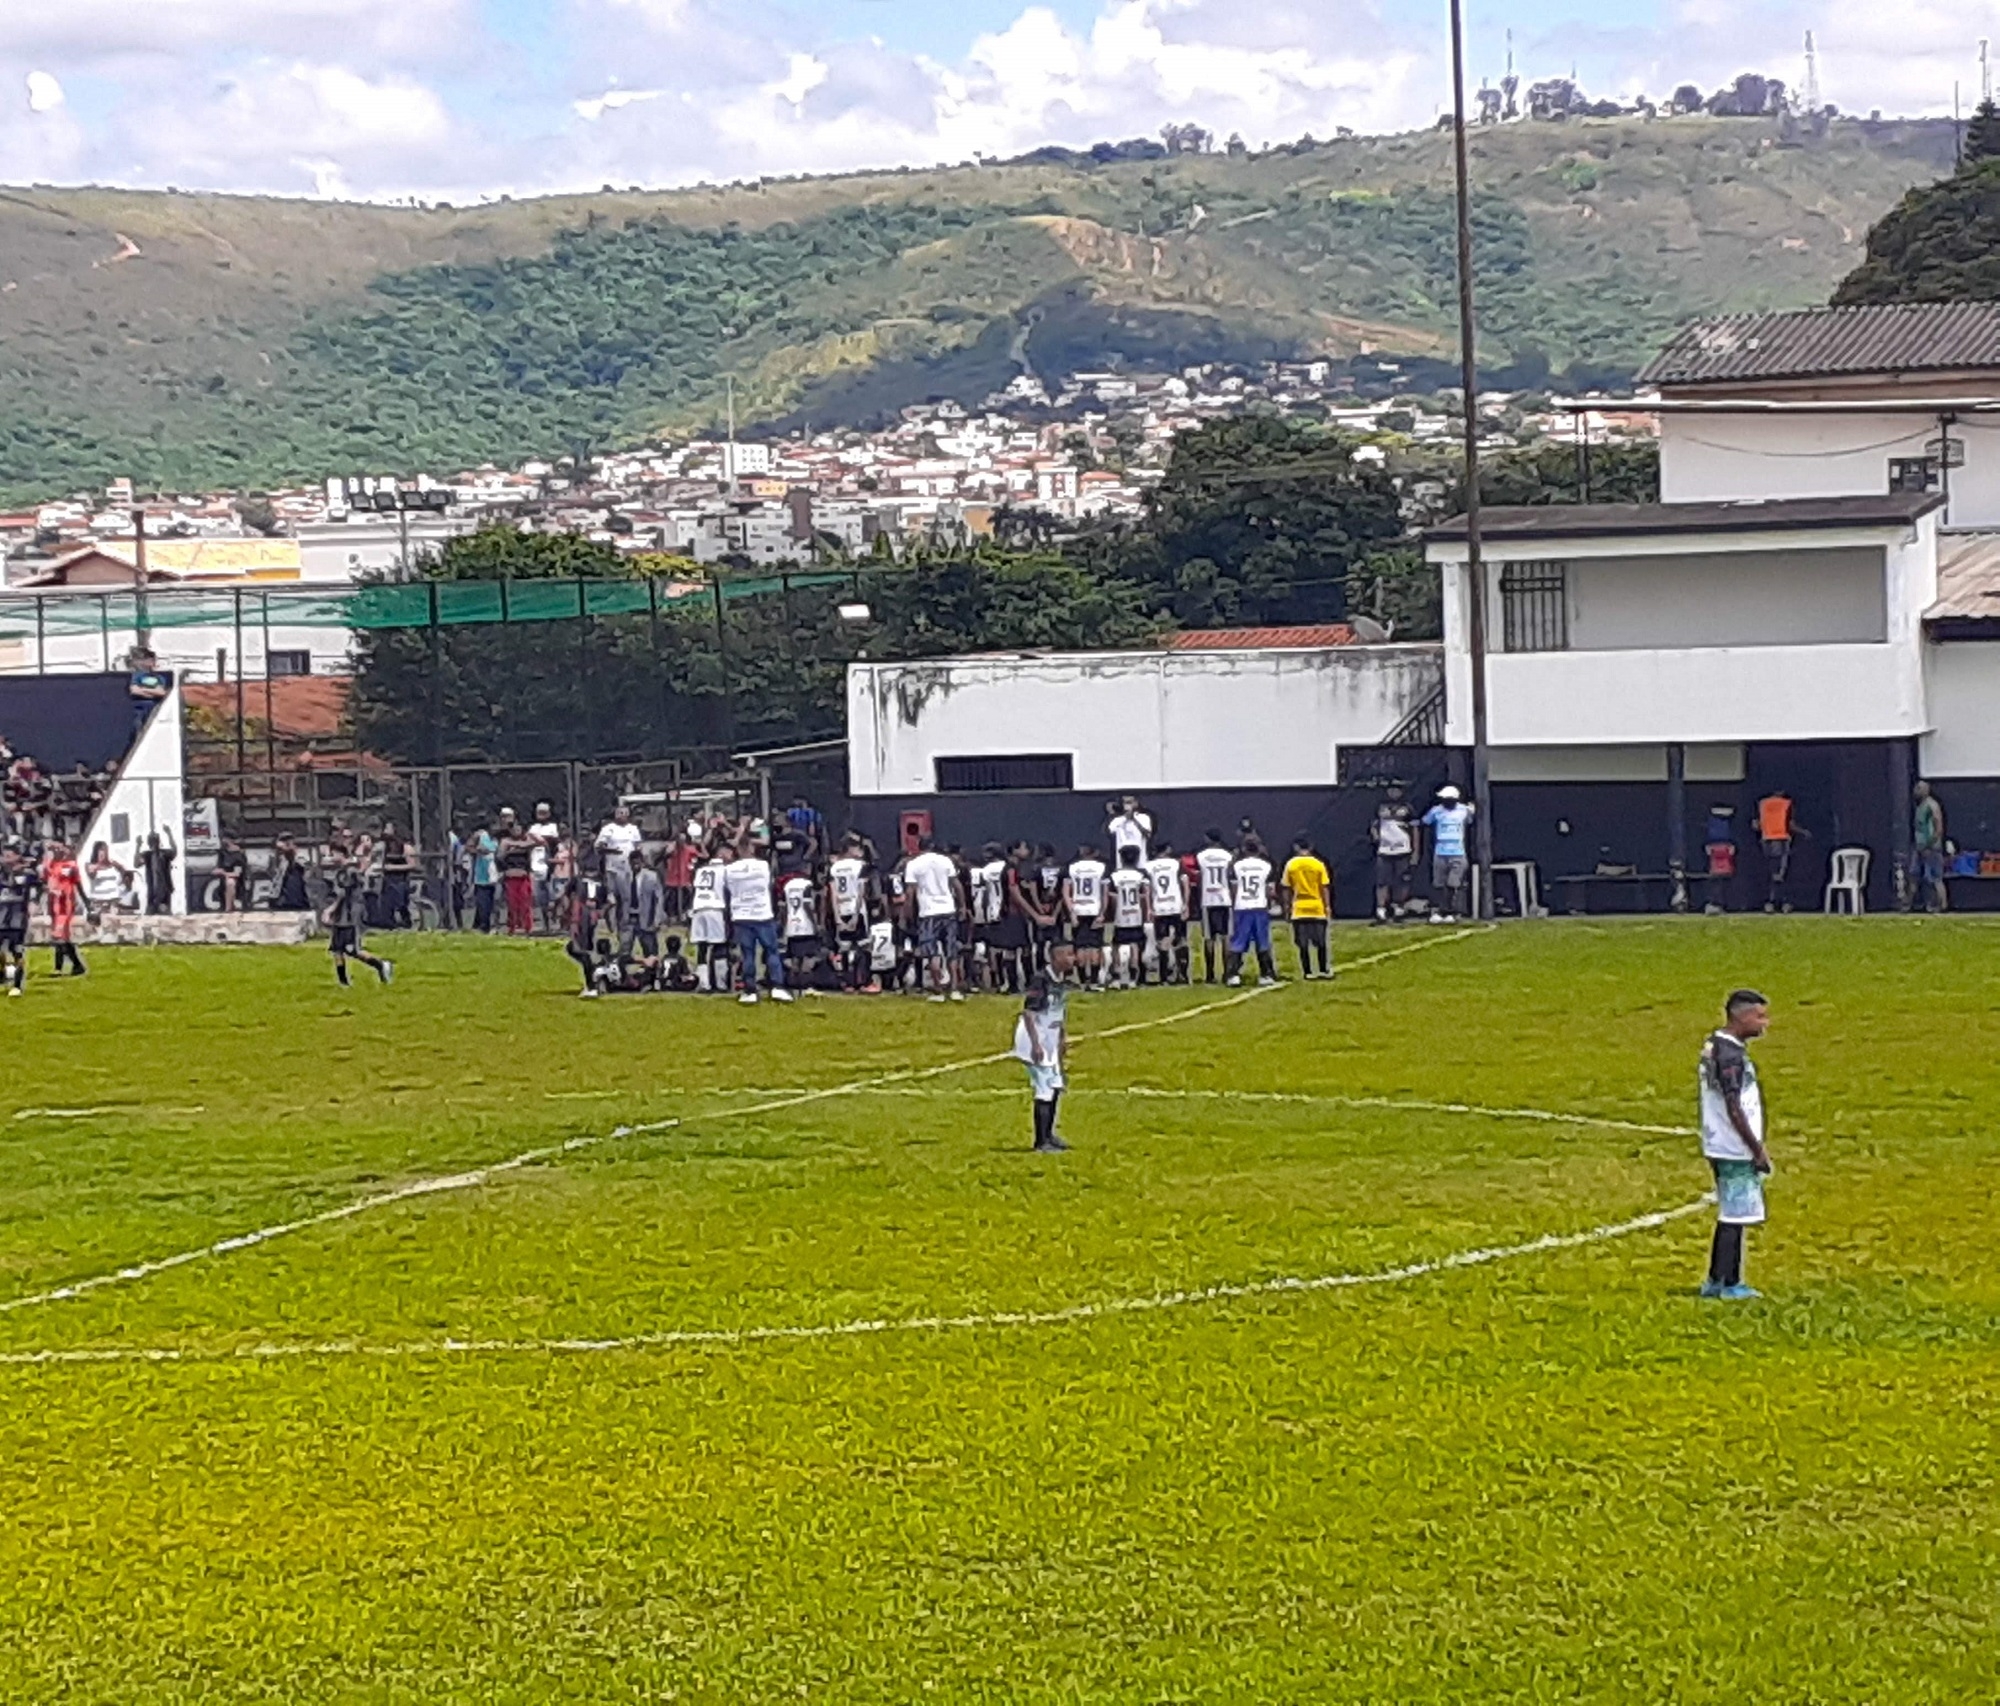 Estádio Emílio Vasconcelos Costa - Ideal Sport Club